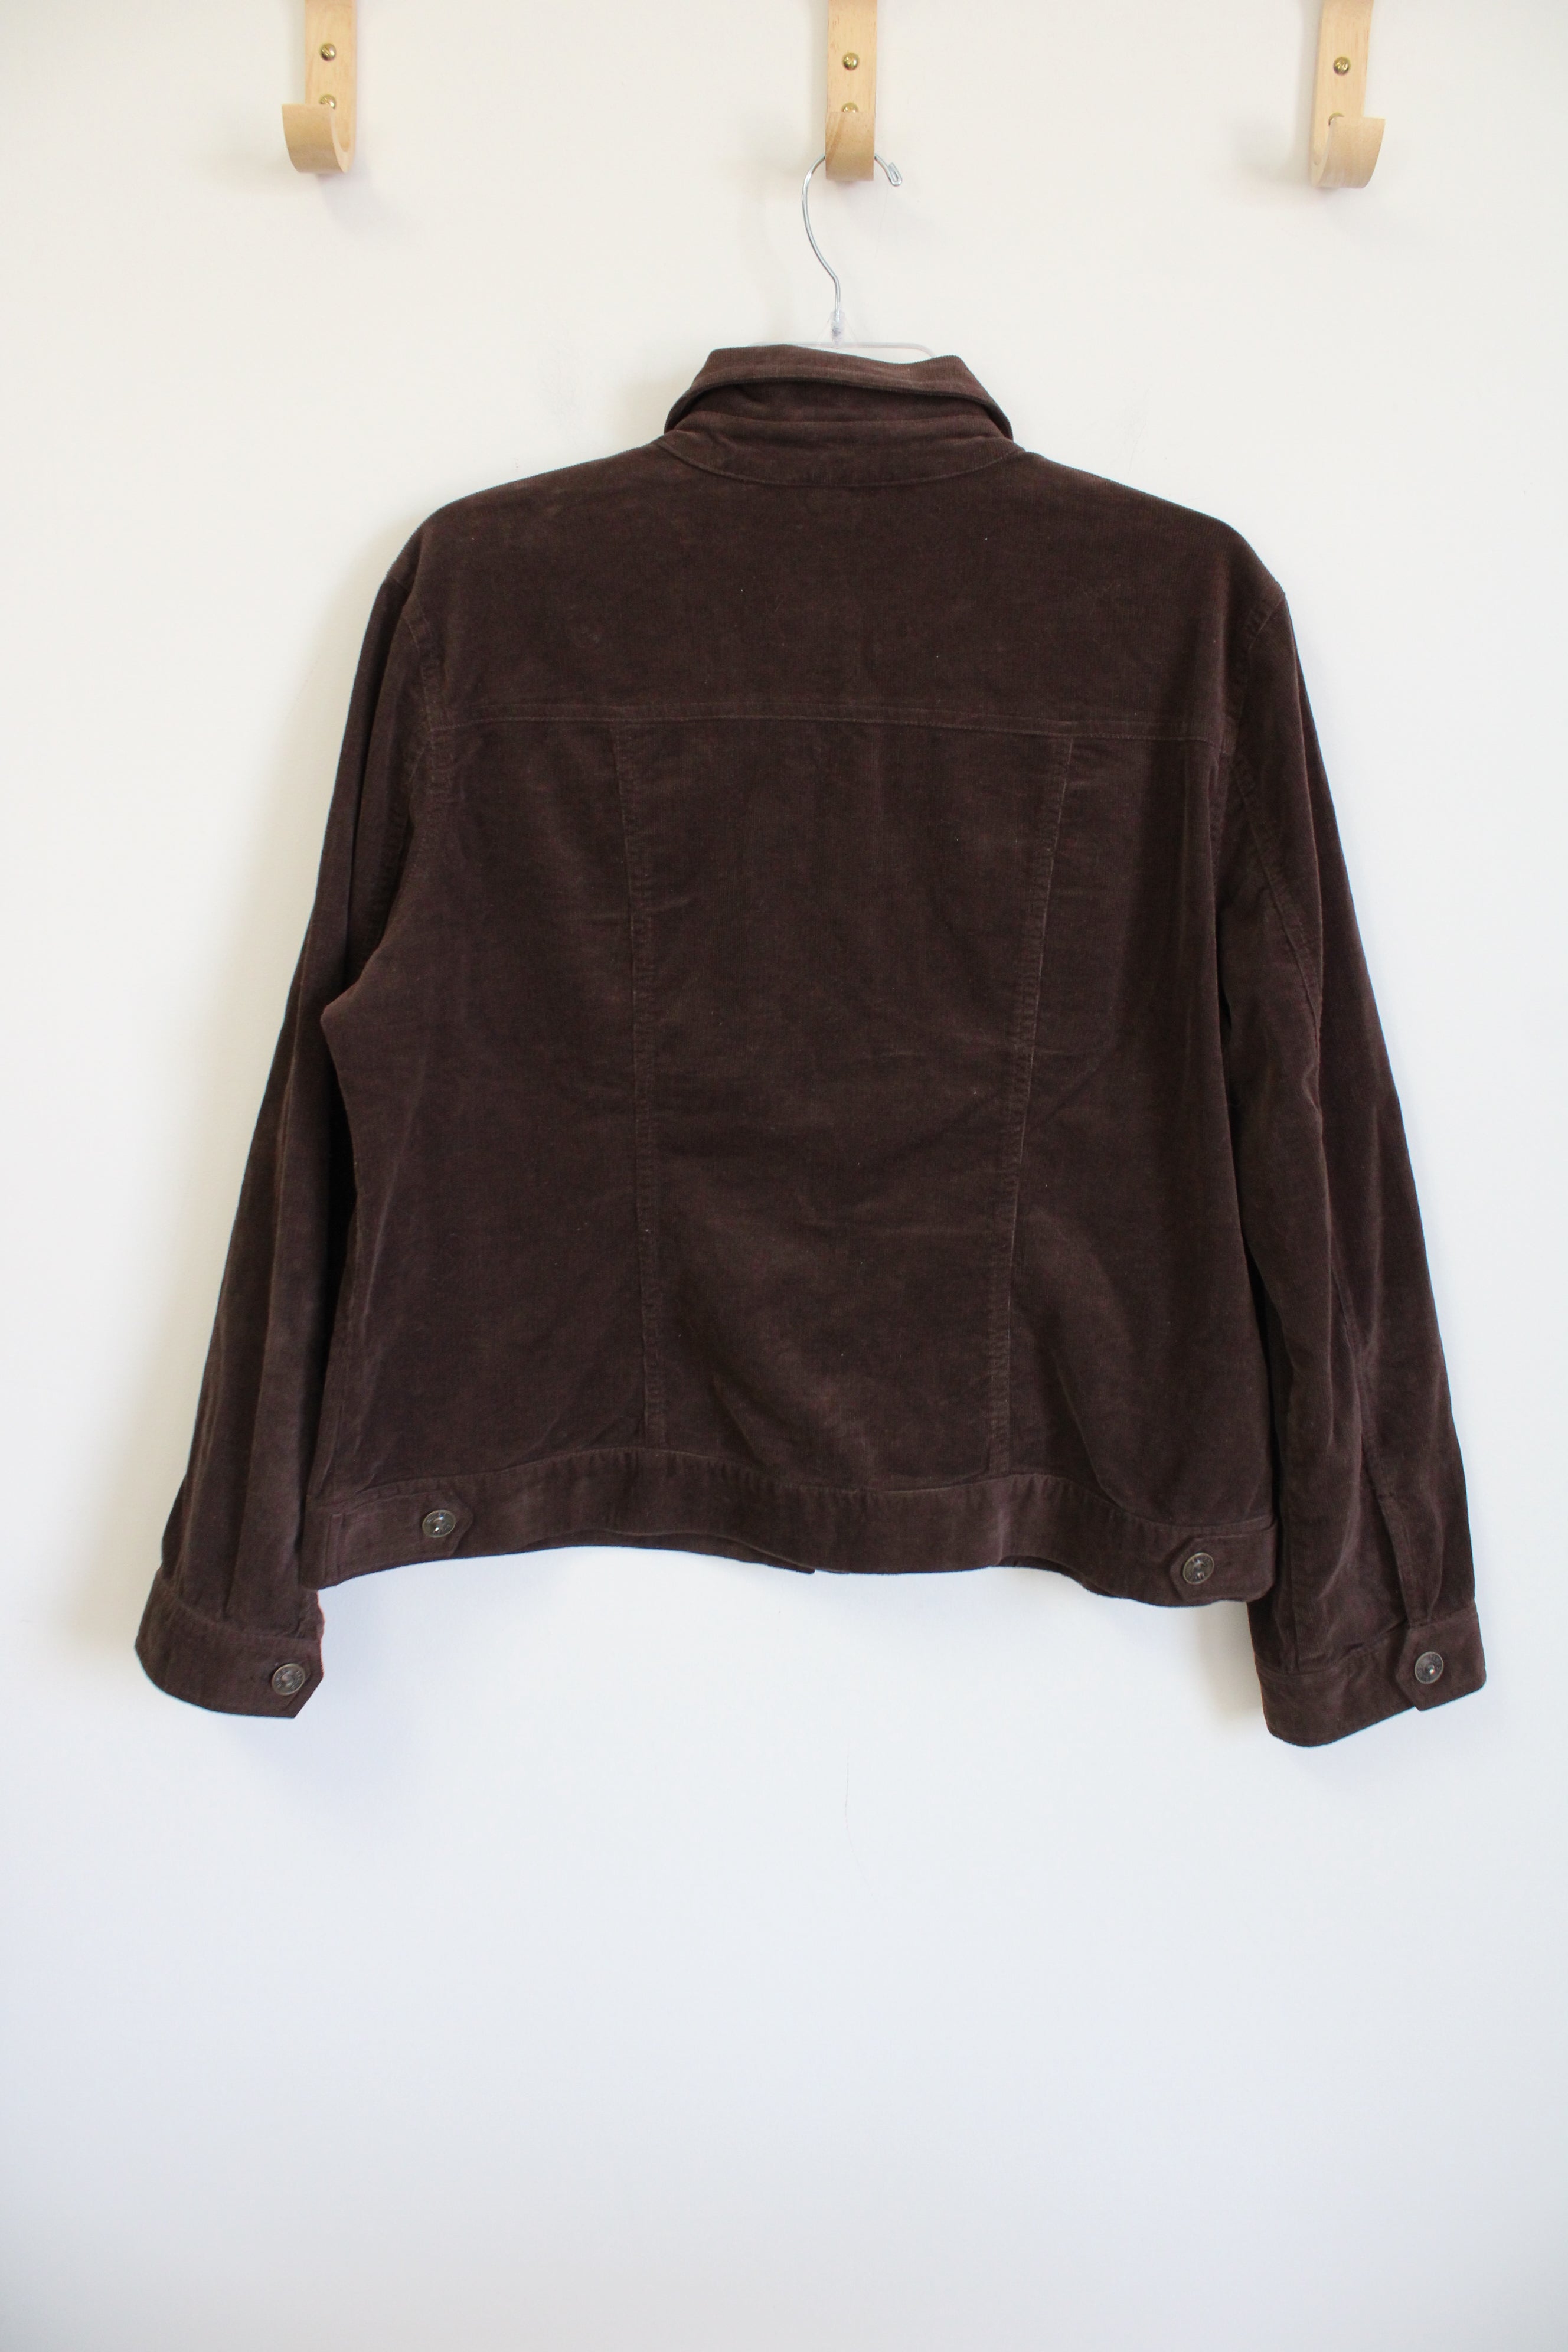 Baccini Brown Corduroy Jacket | XL